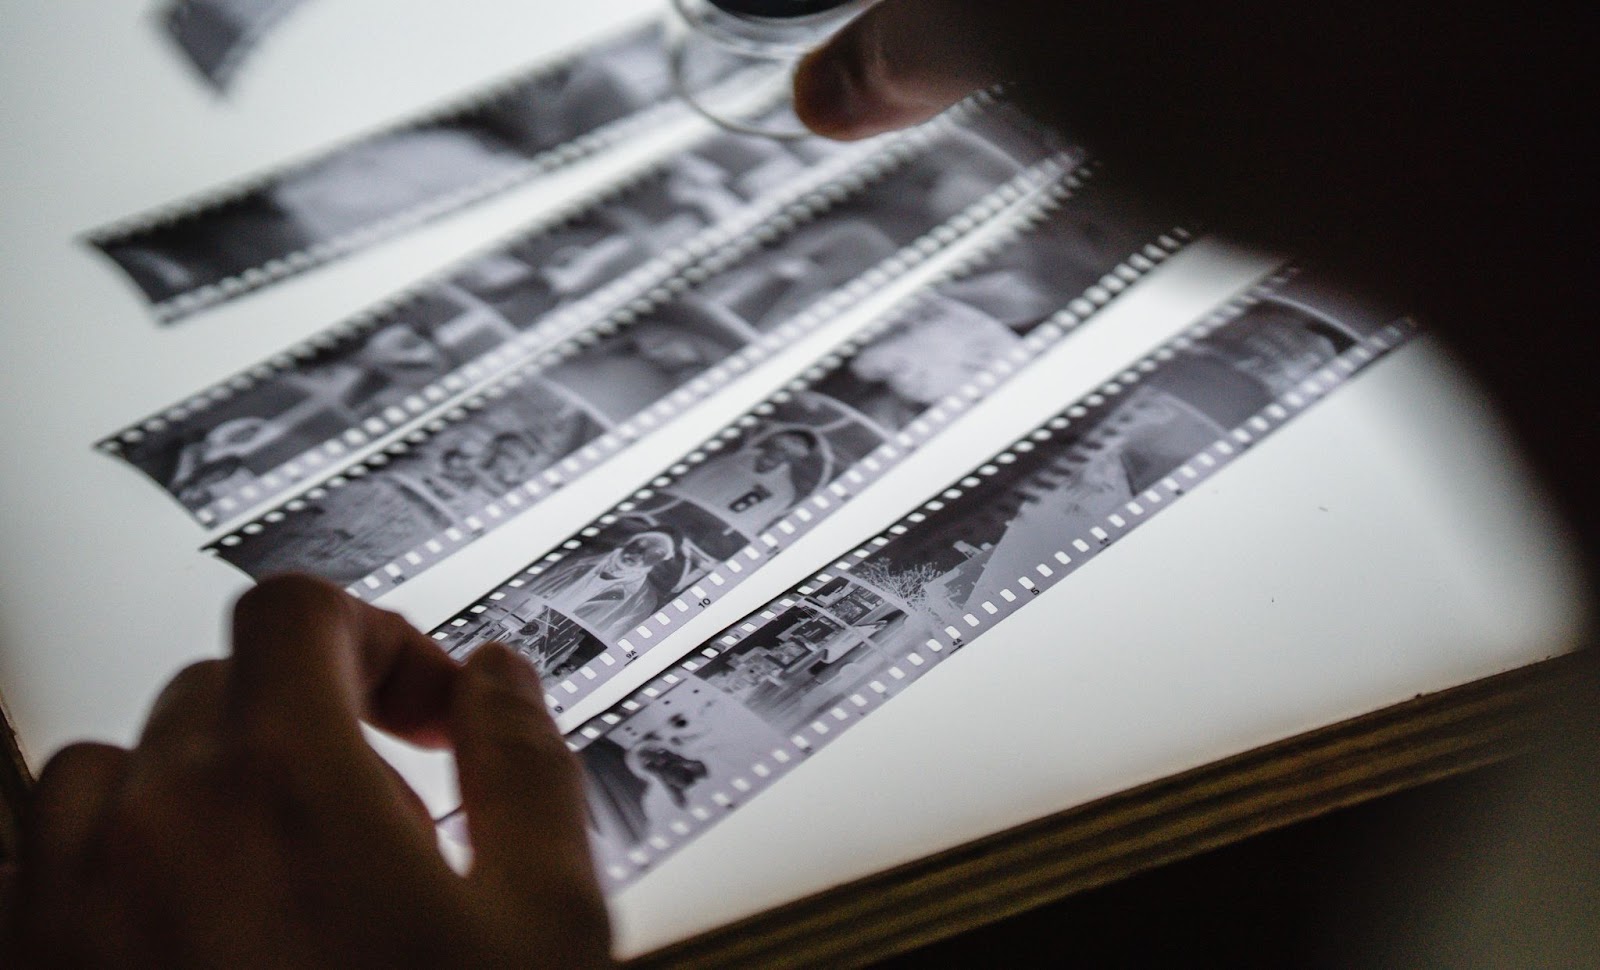 film negatives on a light box